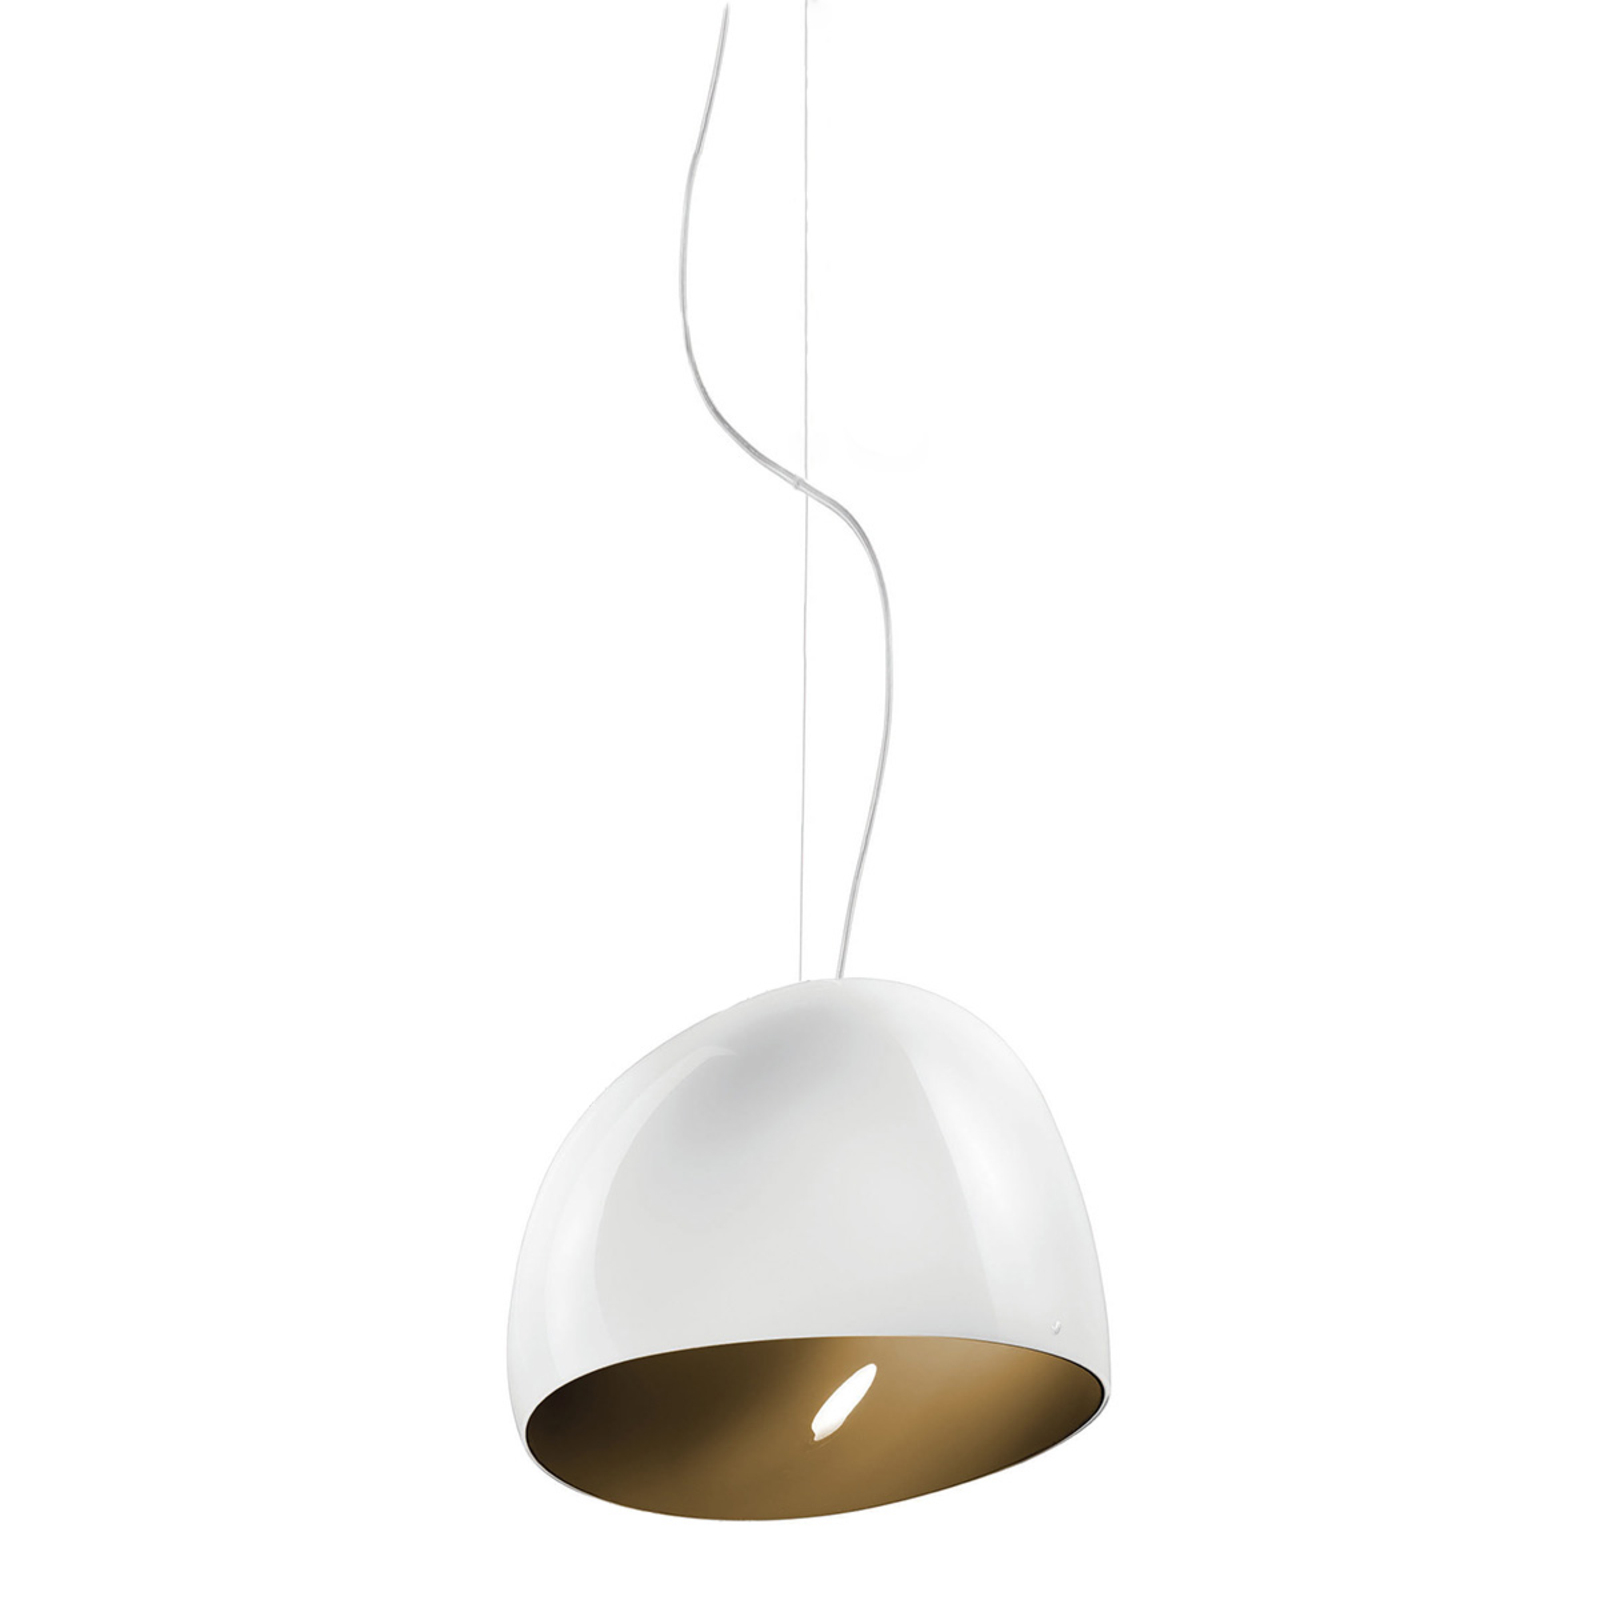 Hanglamp Surface Ø 40 cm, E27 wit/aardbruin